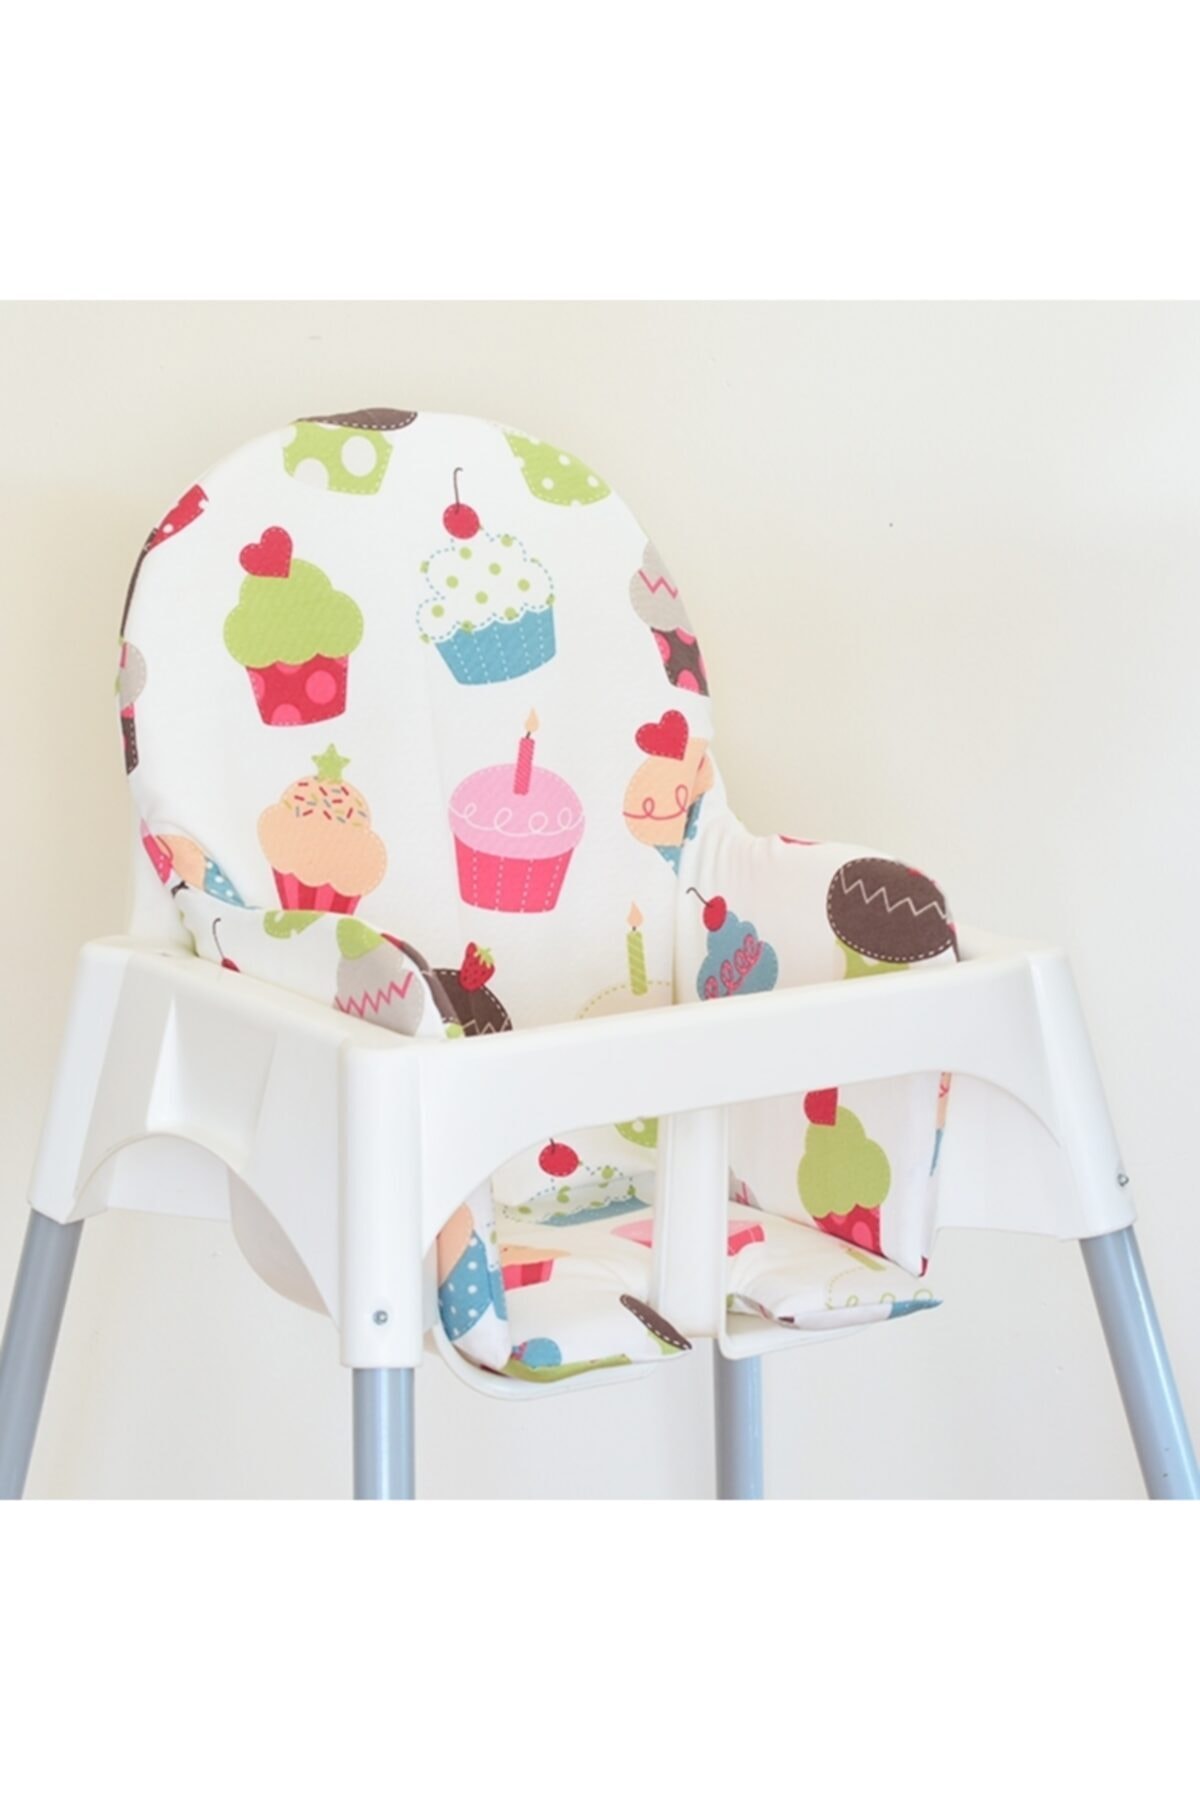 YoldaBebekVar Cupcake - Mama Sandalyesi Minderi Cupcake